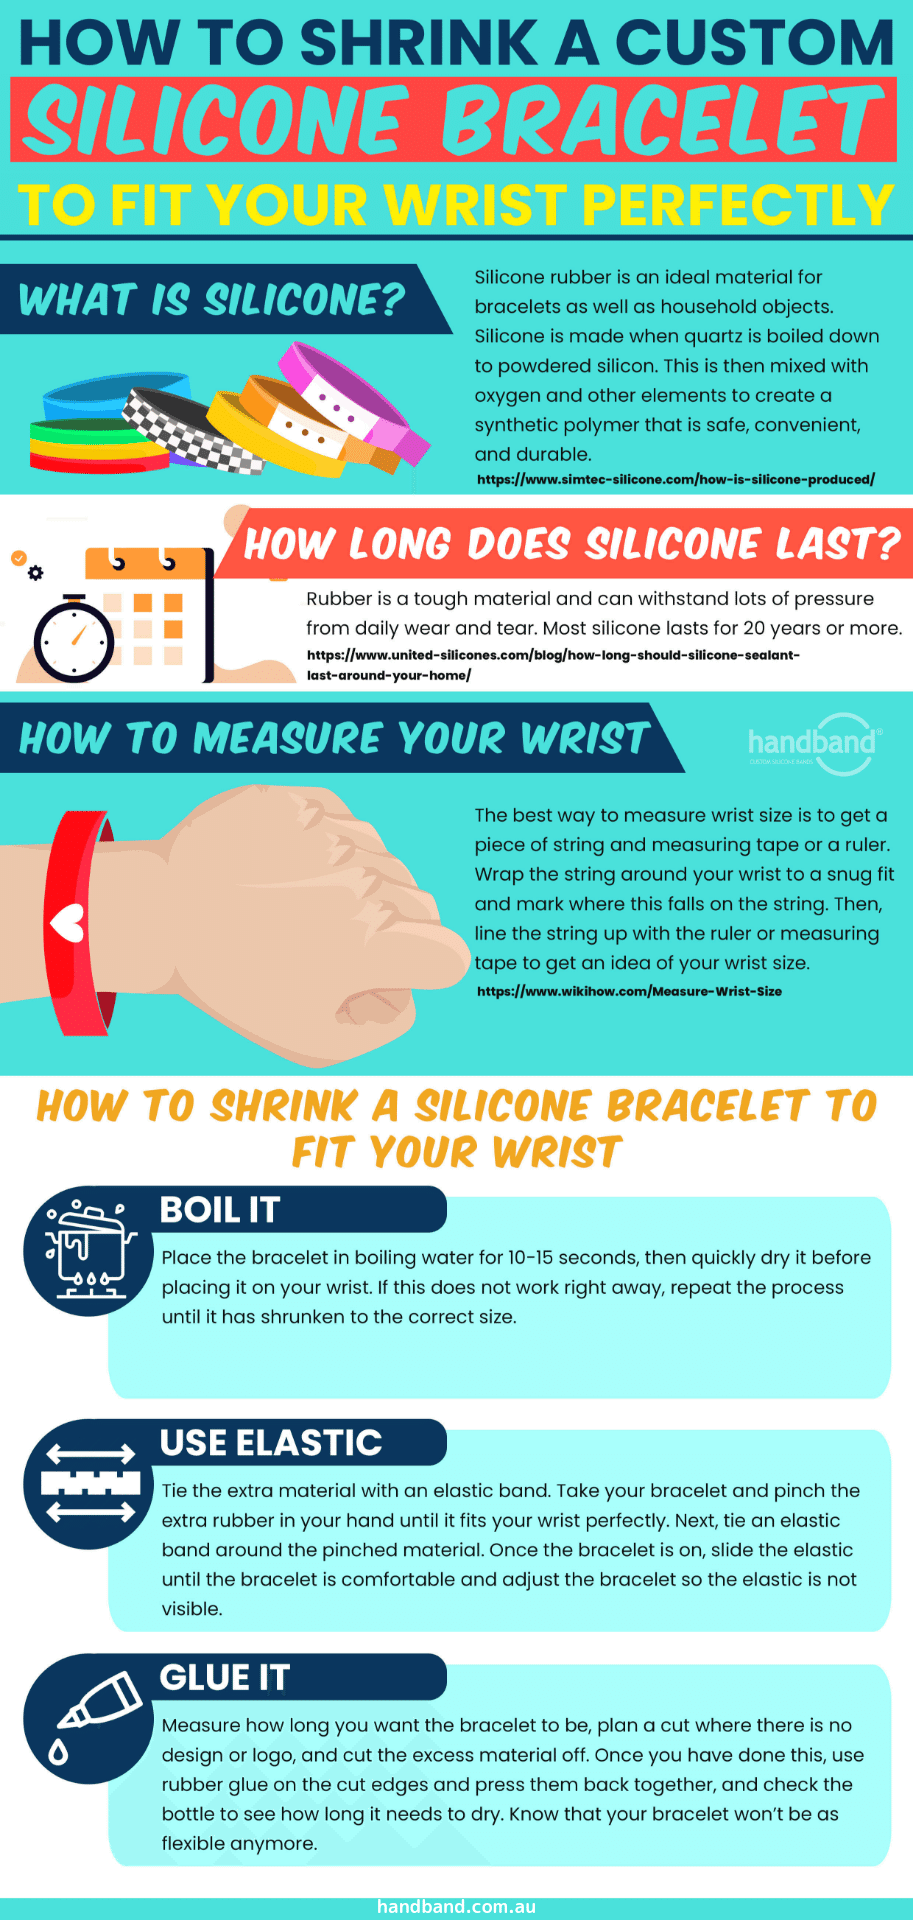 Verenigde Staten van Amerika raket Respectievelijk How to Shrink a Custom Silicone Bracelet to Fit Your Wrist Perfectly 